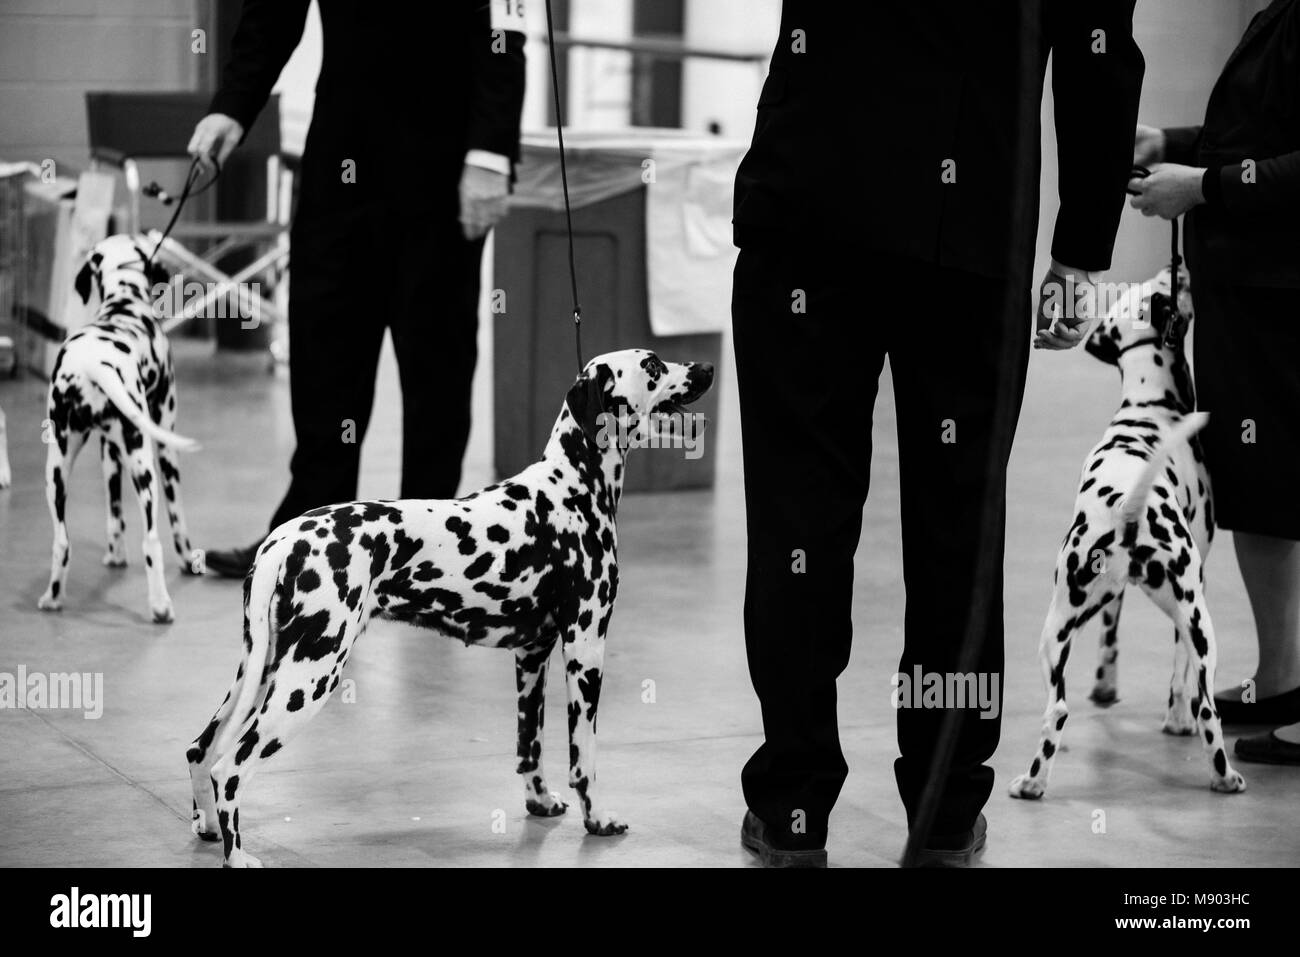 Celtic Classic Dog Show 2018 Dalmatians waiting to do judged. Stock Photo